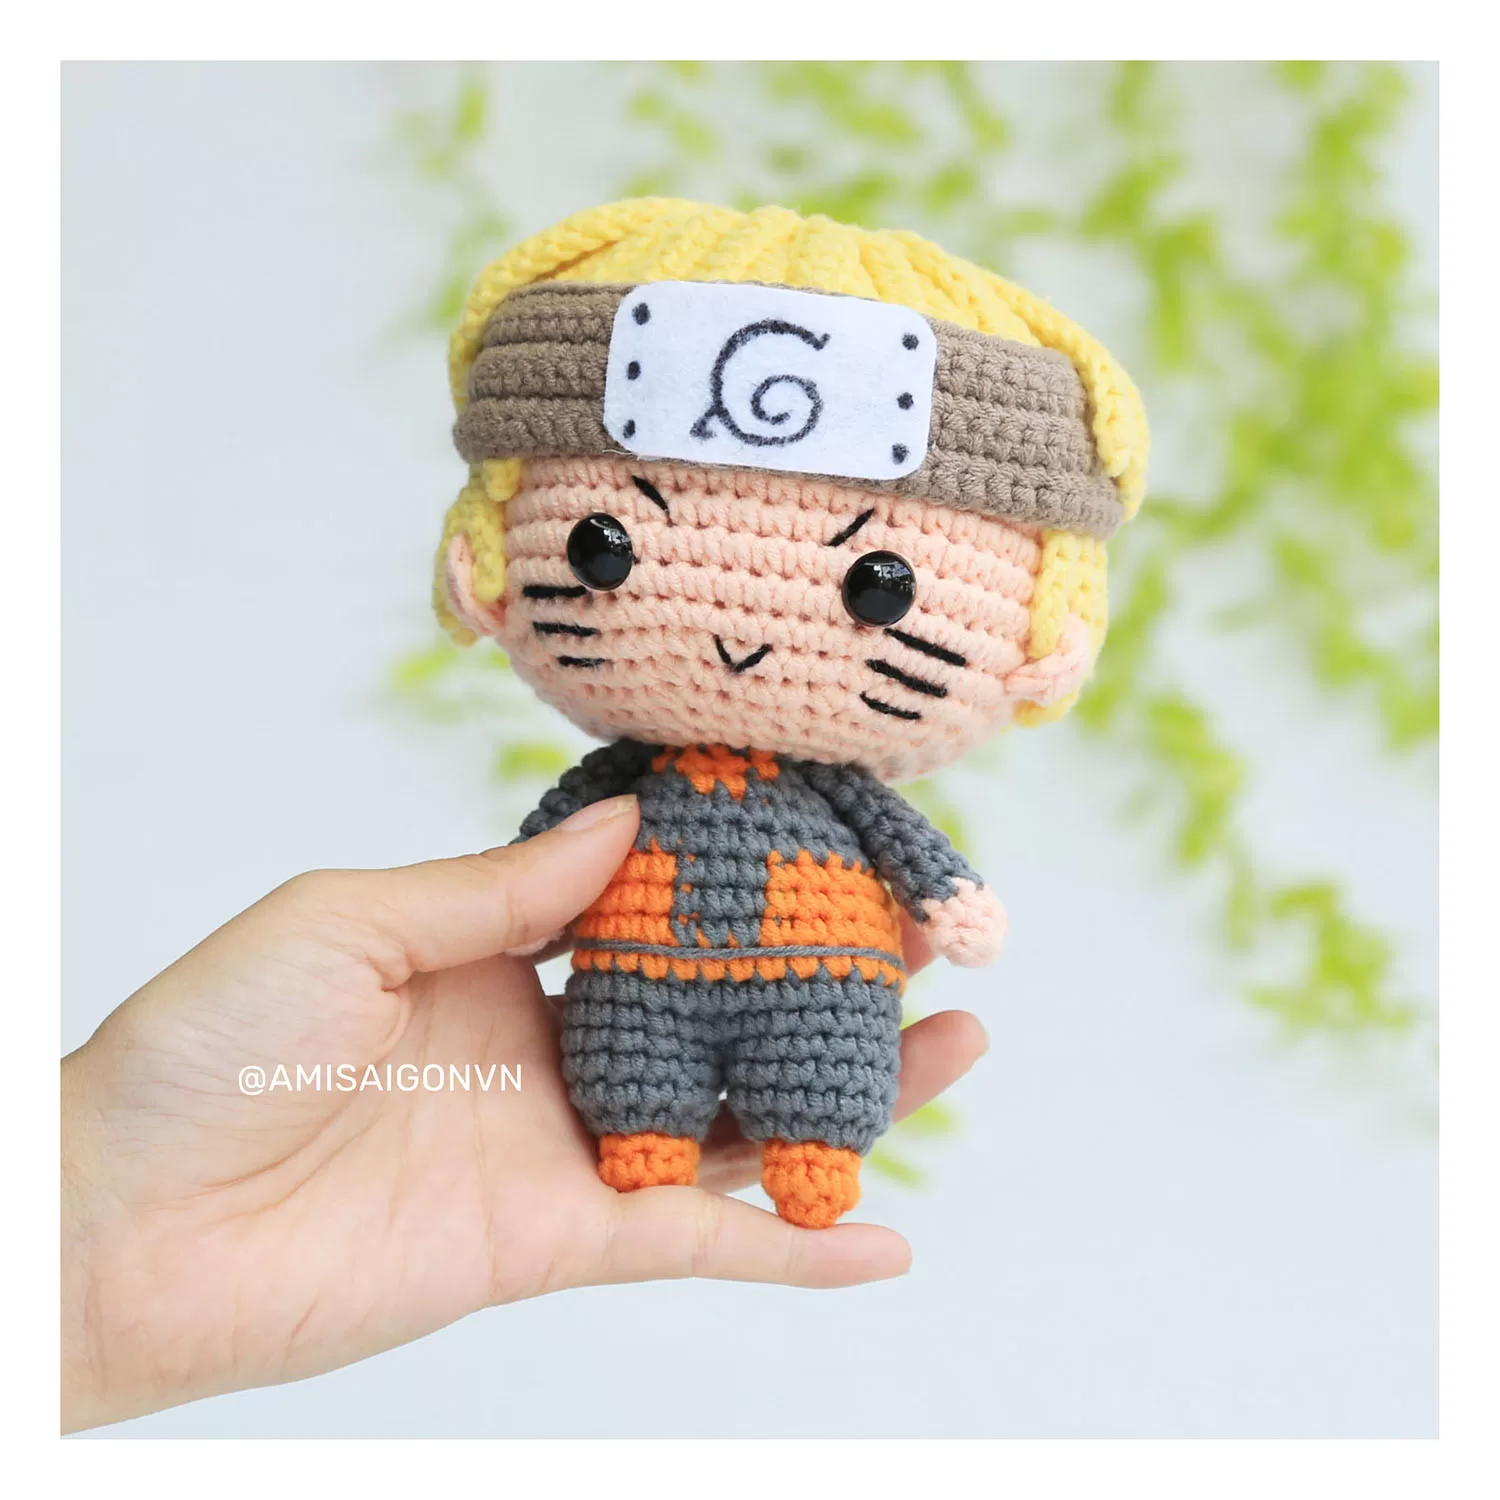 Naruto Doll Amigurumi | Crochet Pattern | Amigurumi Tutorial PDF in English | AmiSaigon